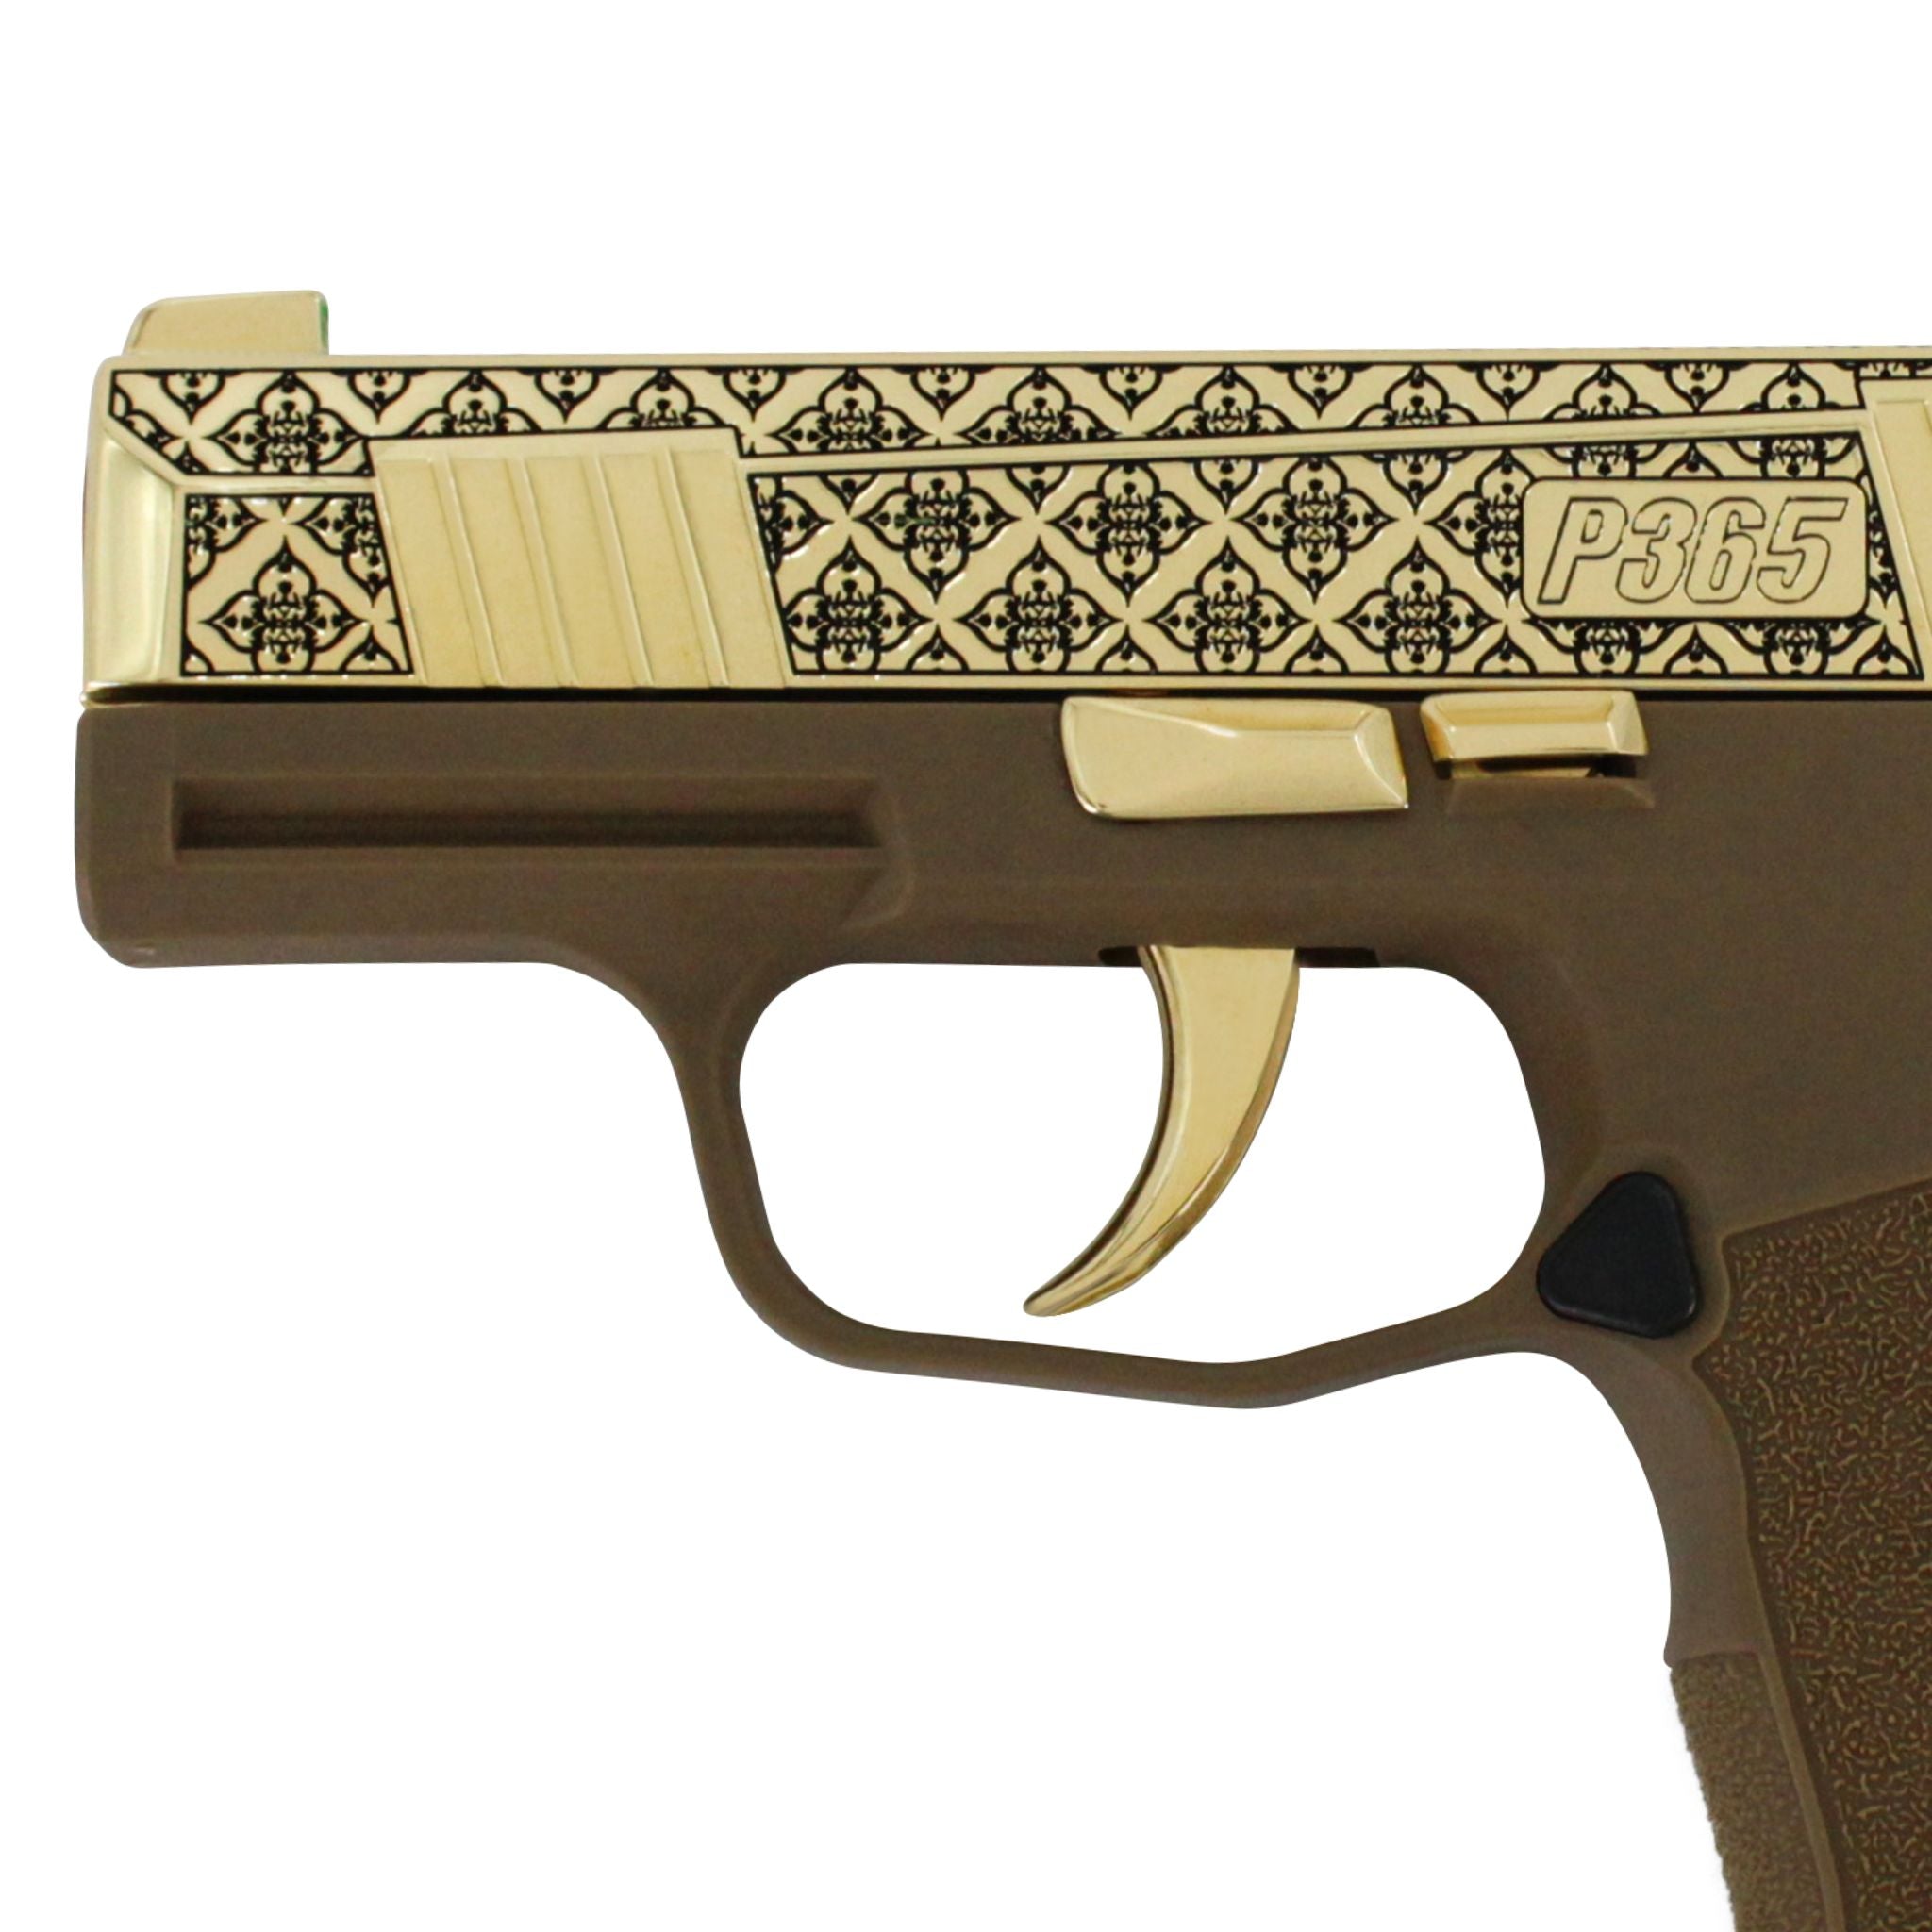 Sig Sauer P365, 9MM, Coyote Arabesque Design, 24K Gold Slide and Accents, SKU: 6697942548582, 24 karat gold gun, 24 Karat Gold Firearm